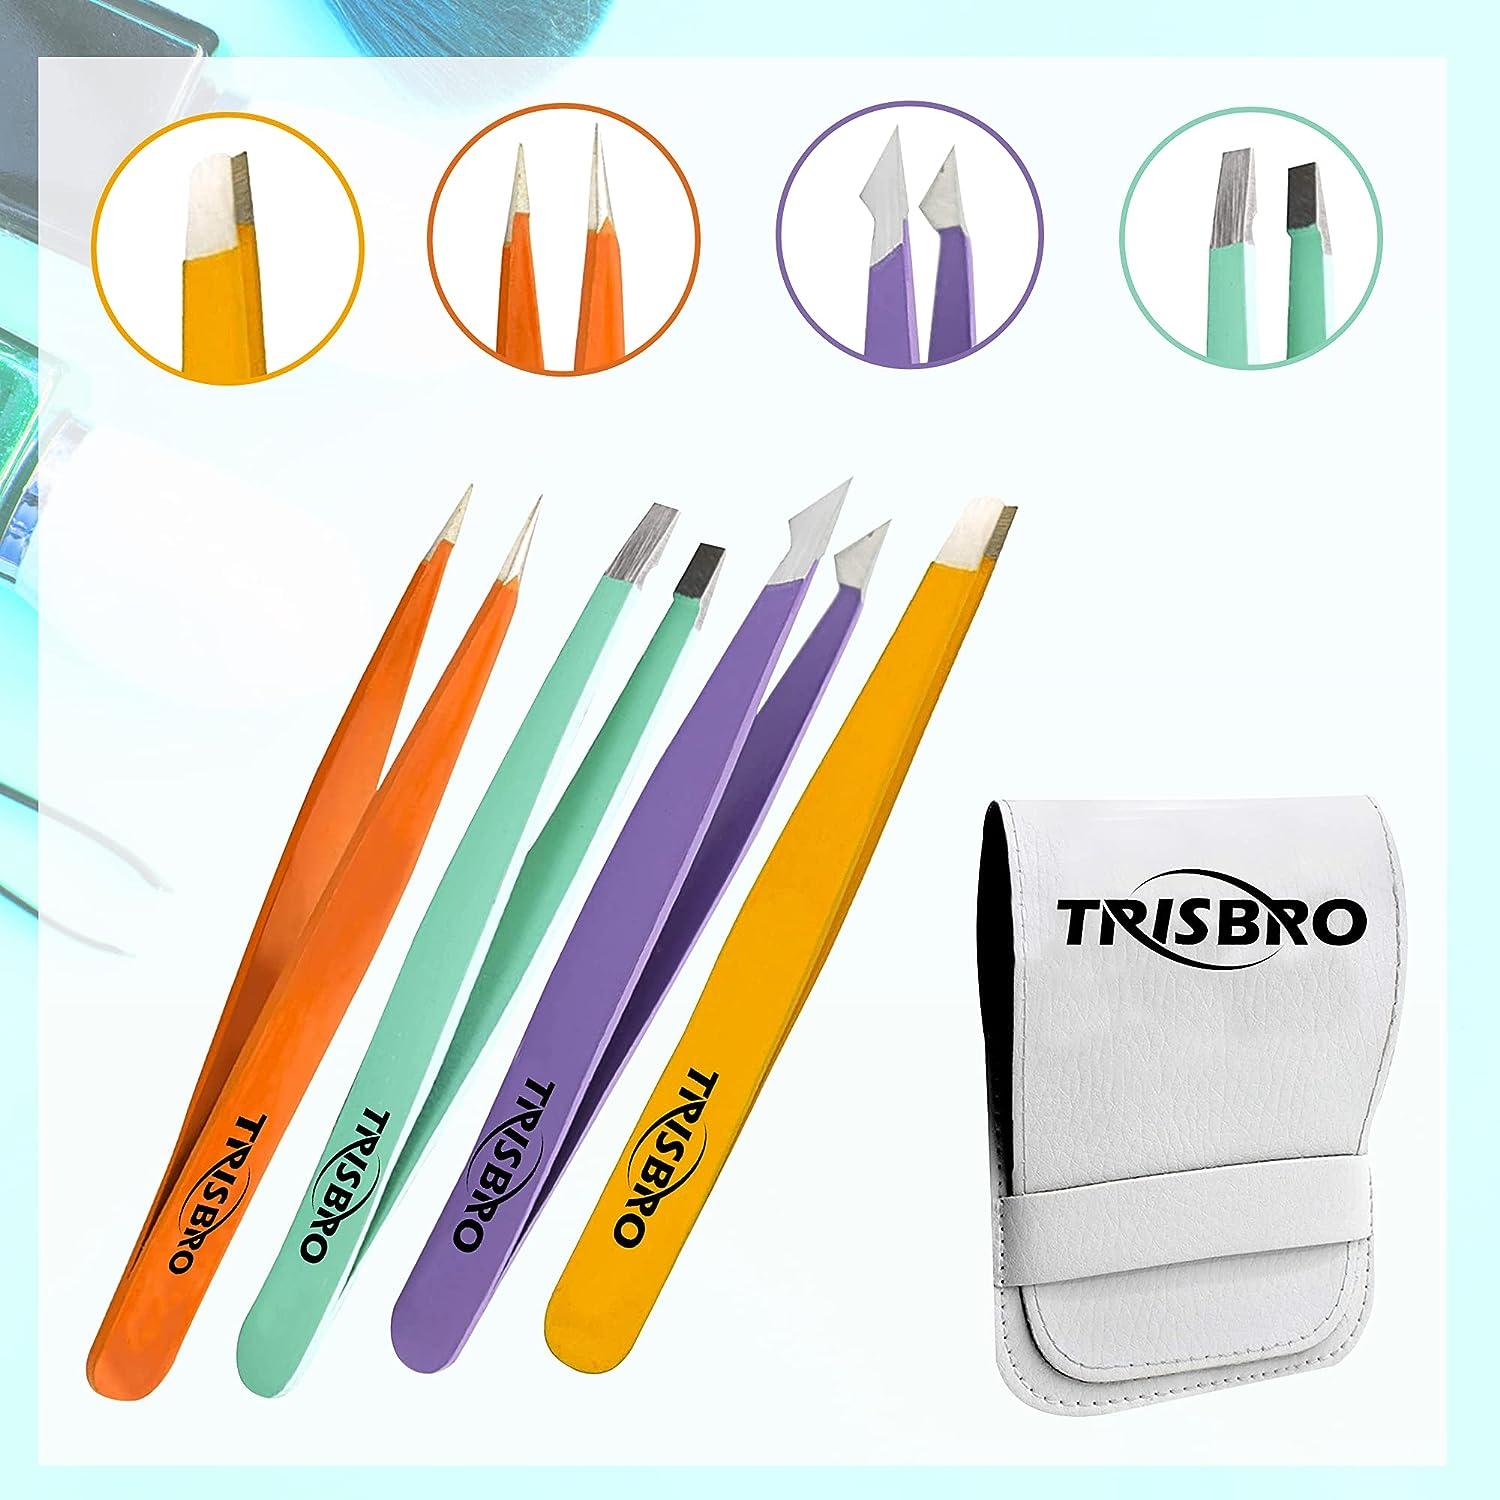 Tweezers Set - Precision Tweezers For Ingrown Hair removal